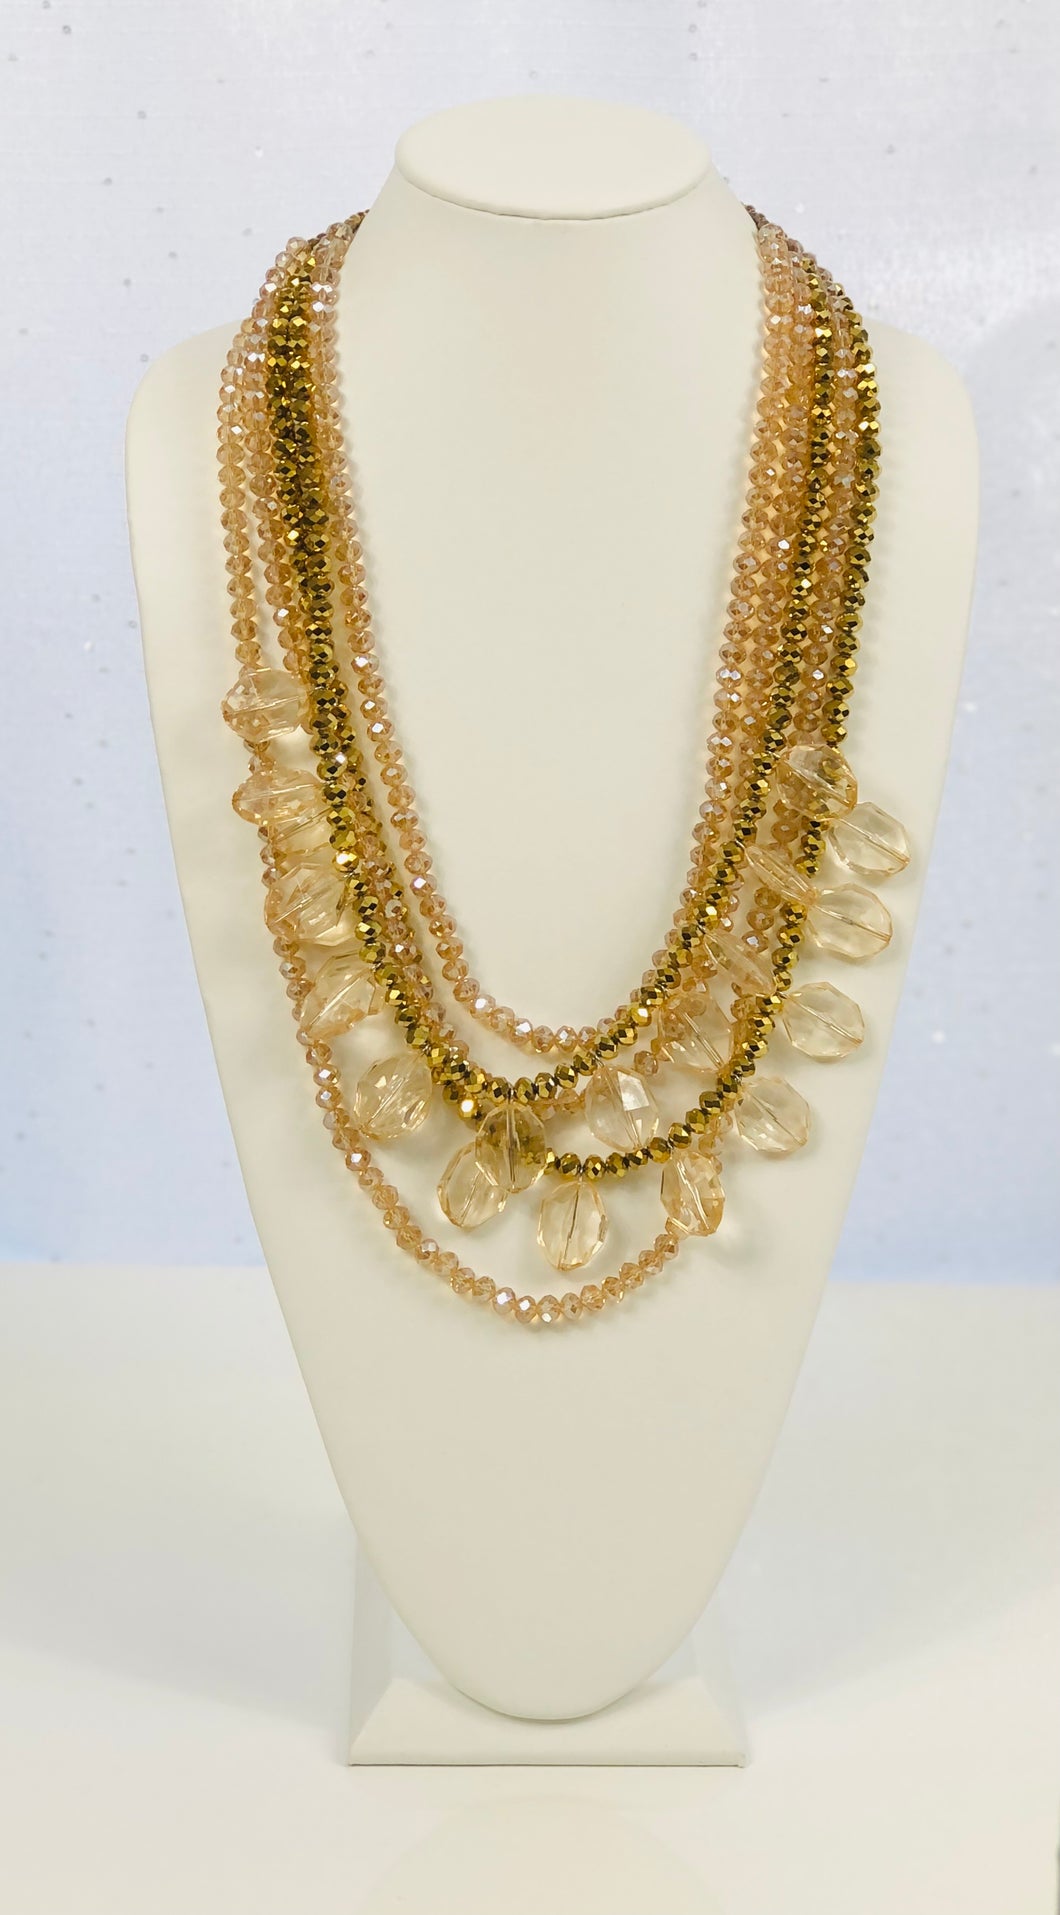 Kensington Glass Beads Necklace - Gold